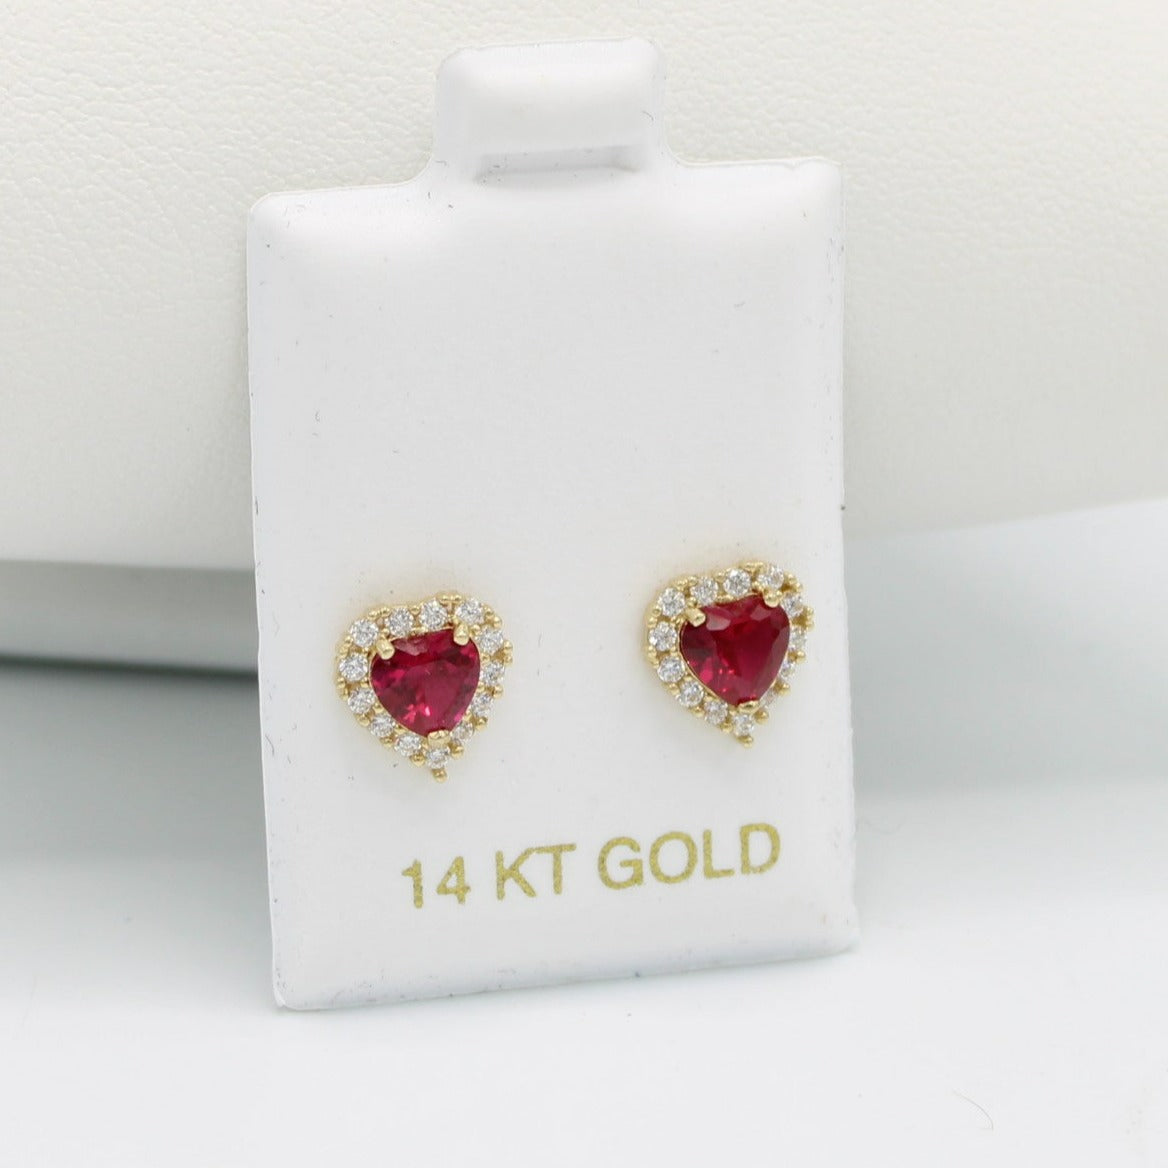 10k White Gold Stud Earrings – Children Earrings by Lovearing